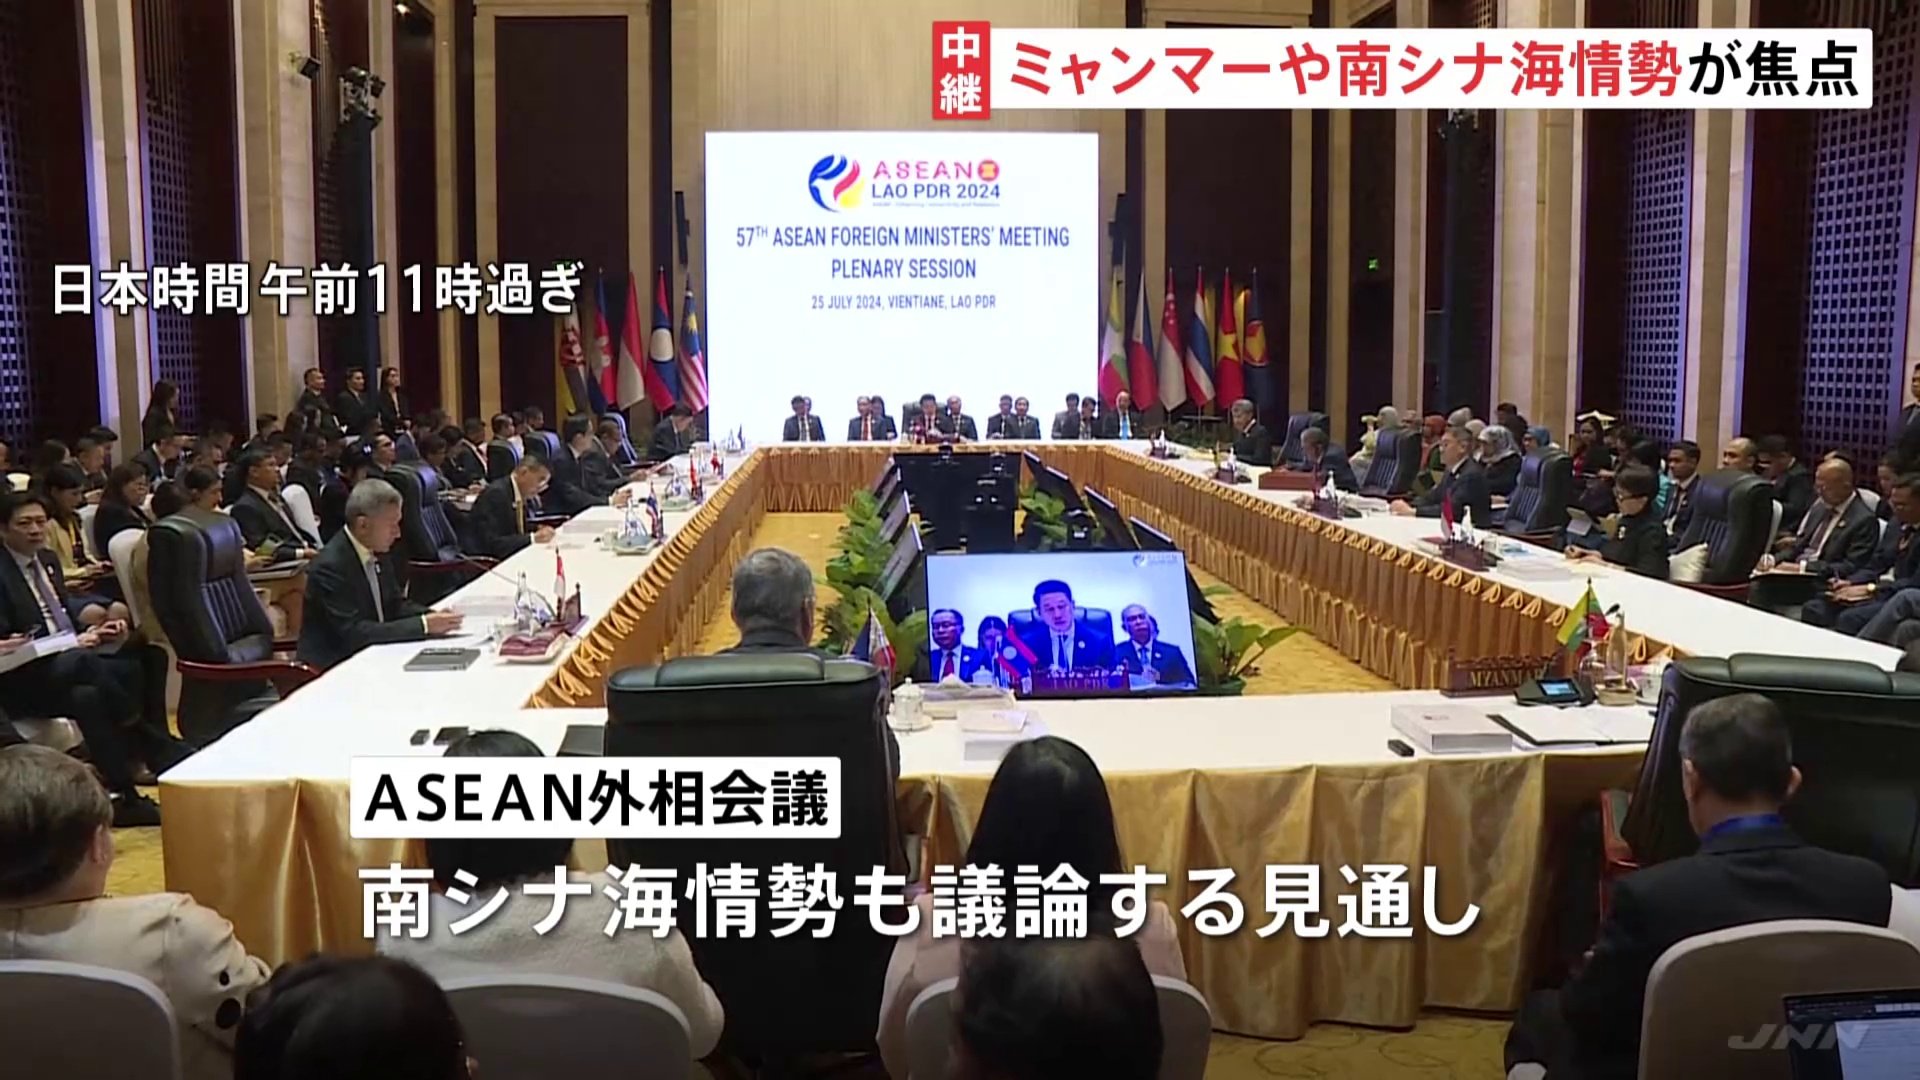 ASEAN関連外相会議開幕　ミャンマーや南シナ海の情勢が焦点　東南アジアでの中国の影響力強まり「結束にほころび」との見方も